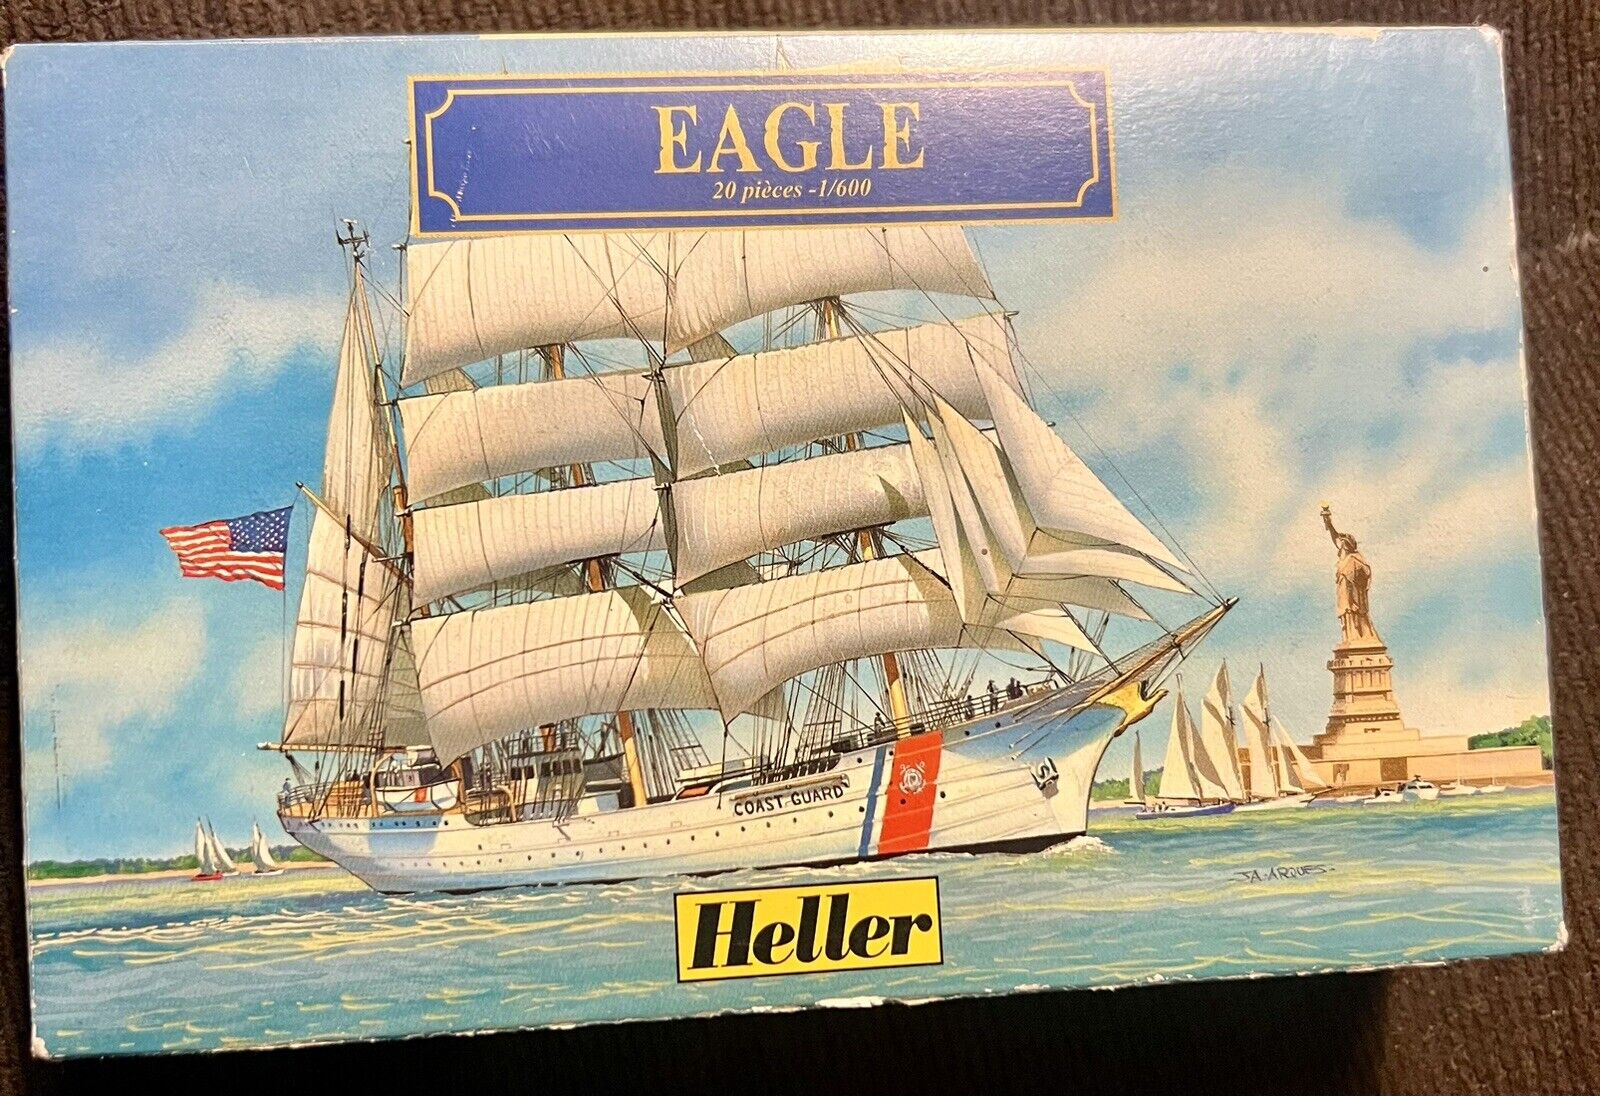 Heller Eagle 1/600 Scale Model Kit 20 pieces #79859